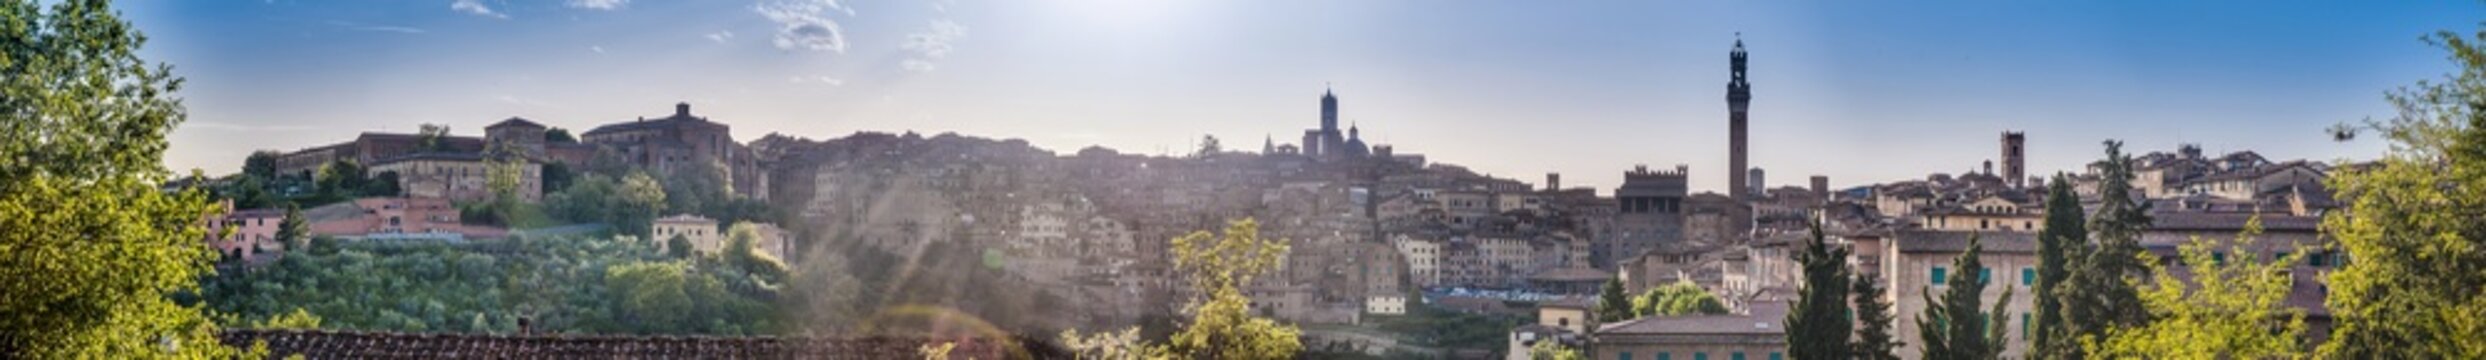 Siena Skyline as seen from San Francesco, Tuscany, Italy